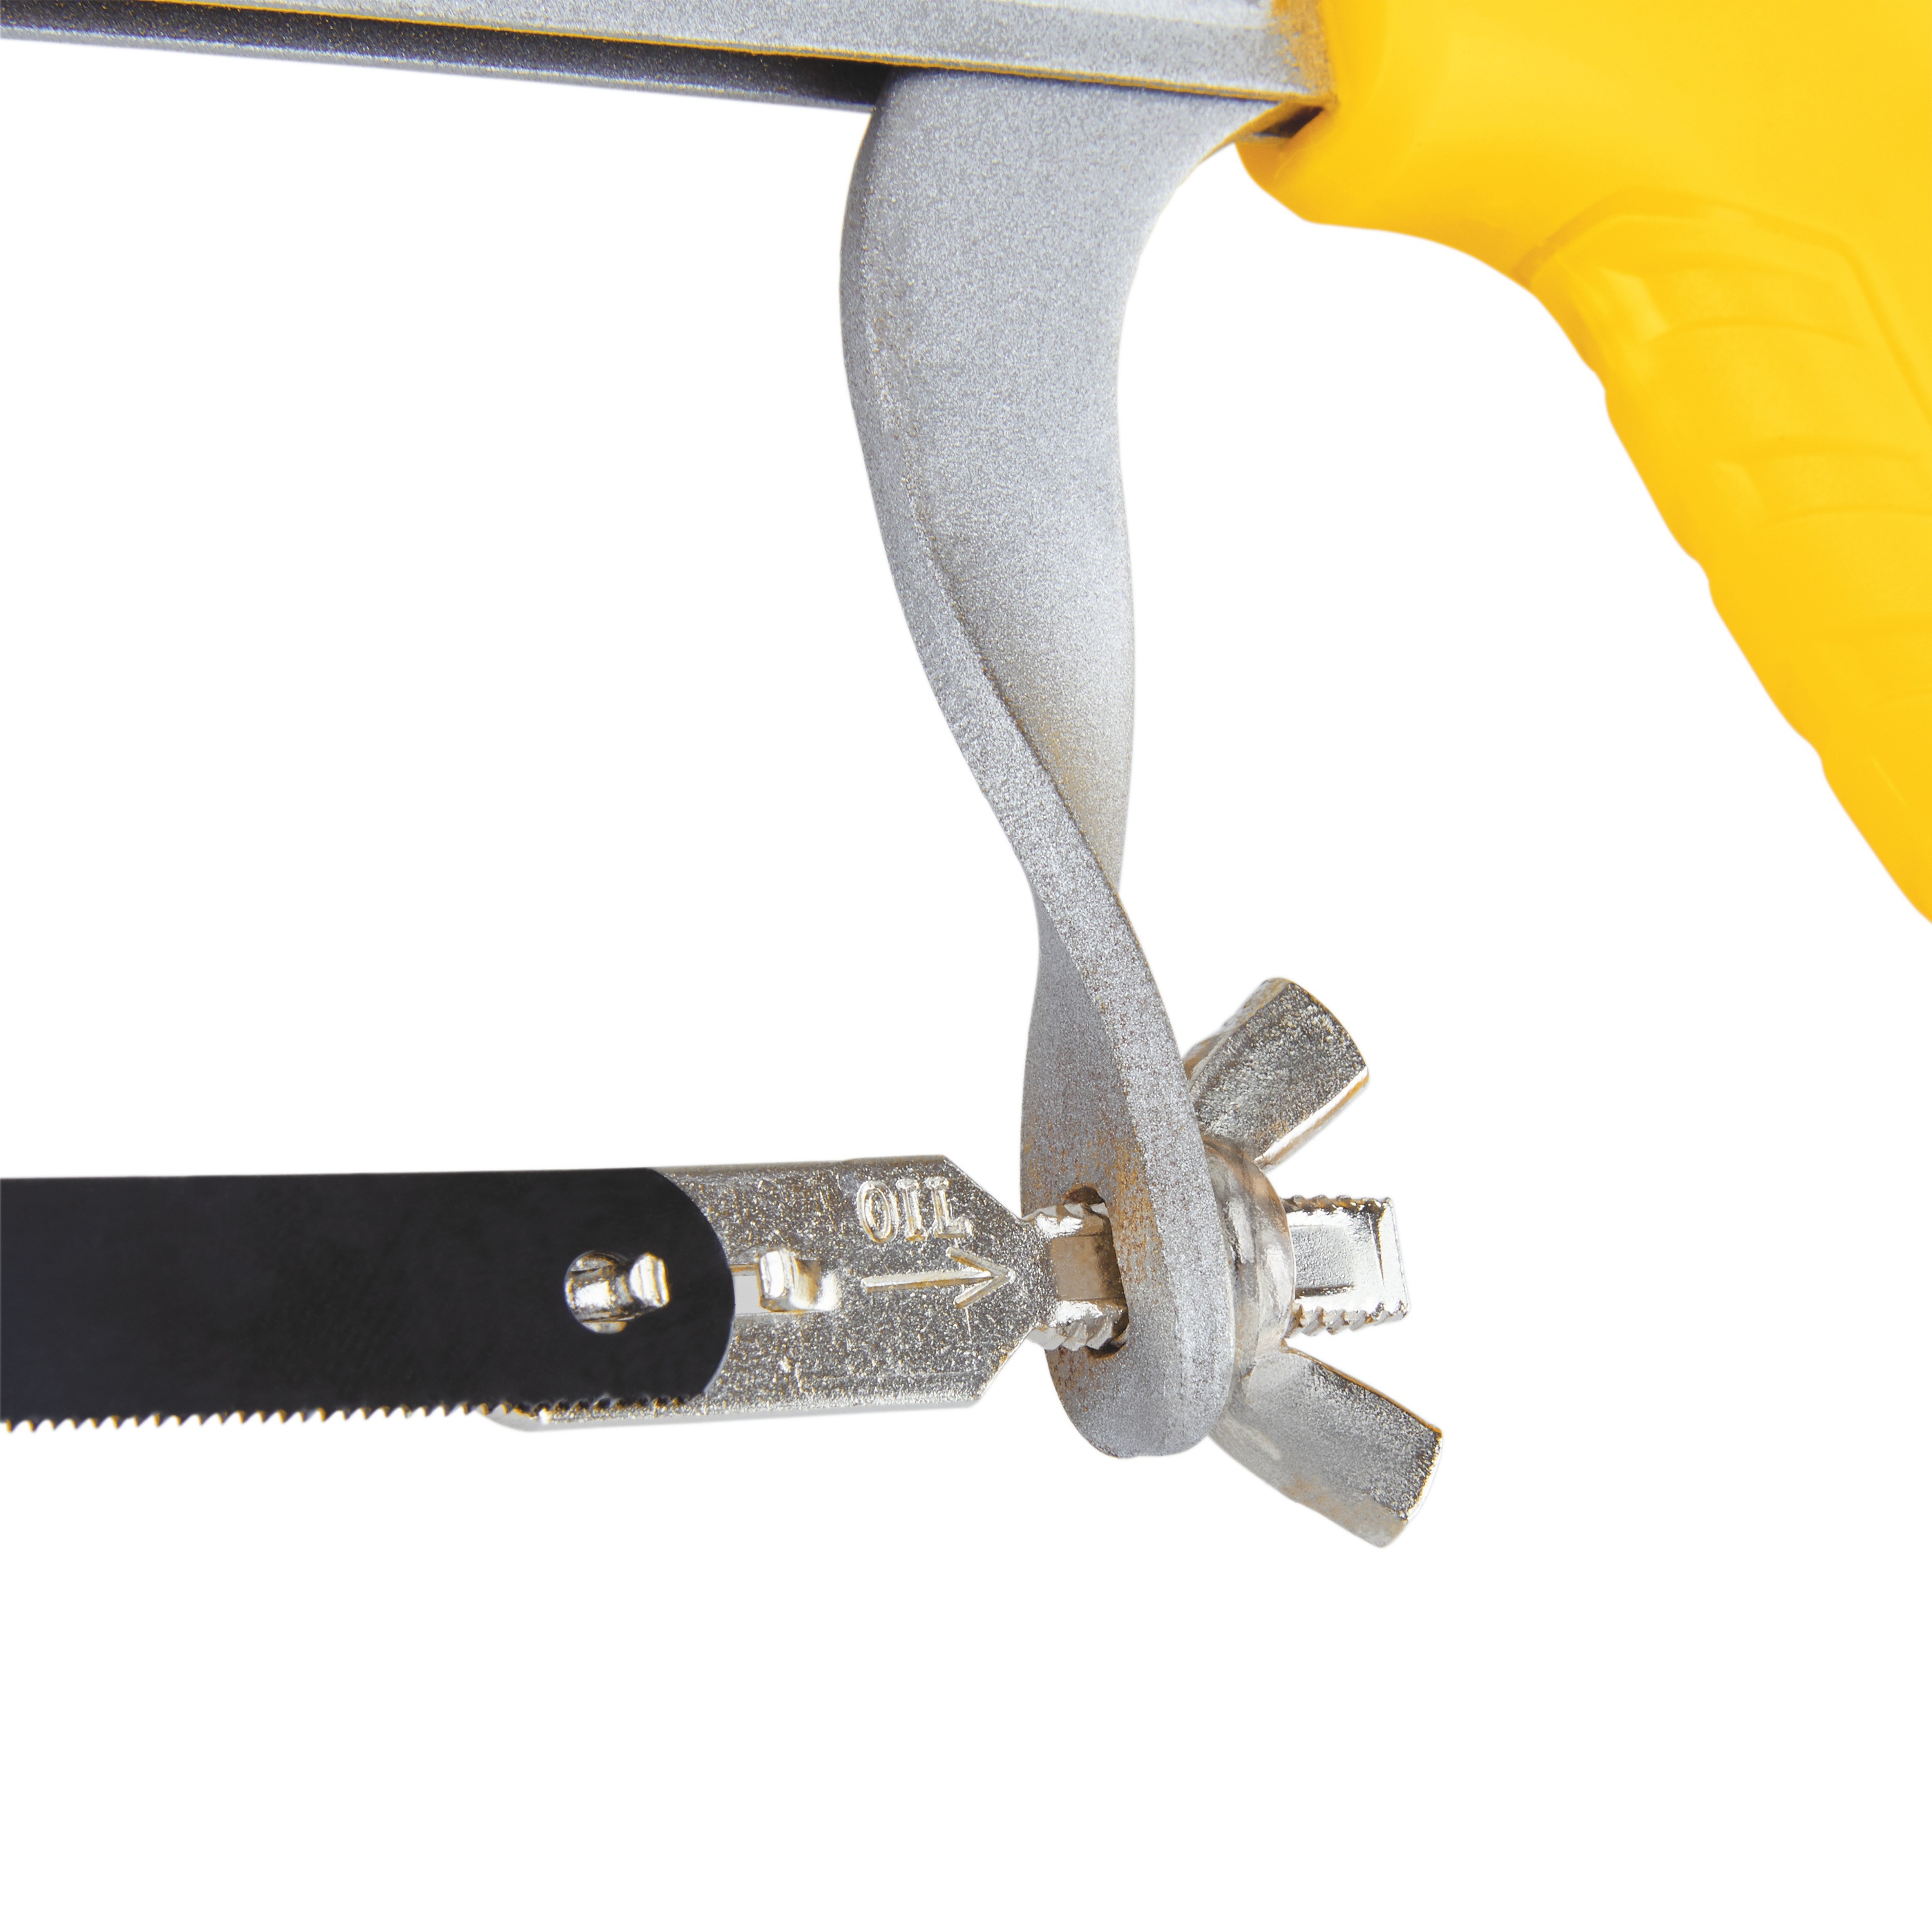 Stanley Tools - Adjustable Hacksaw - STHT14039